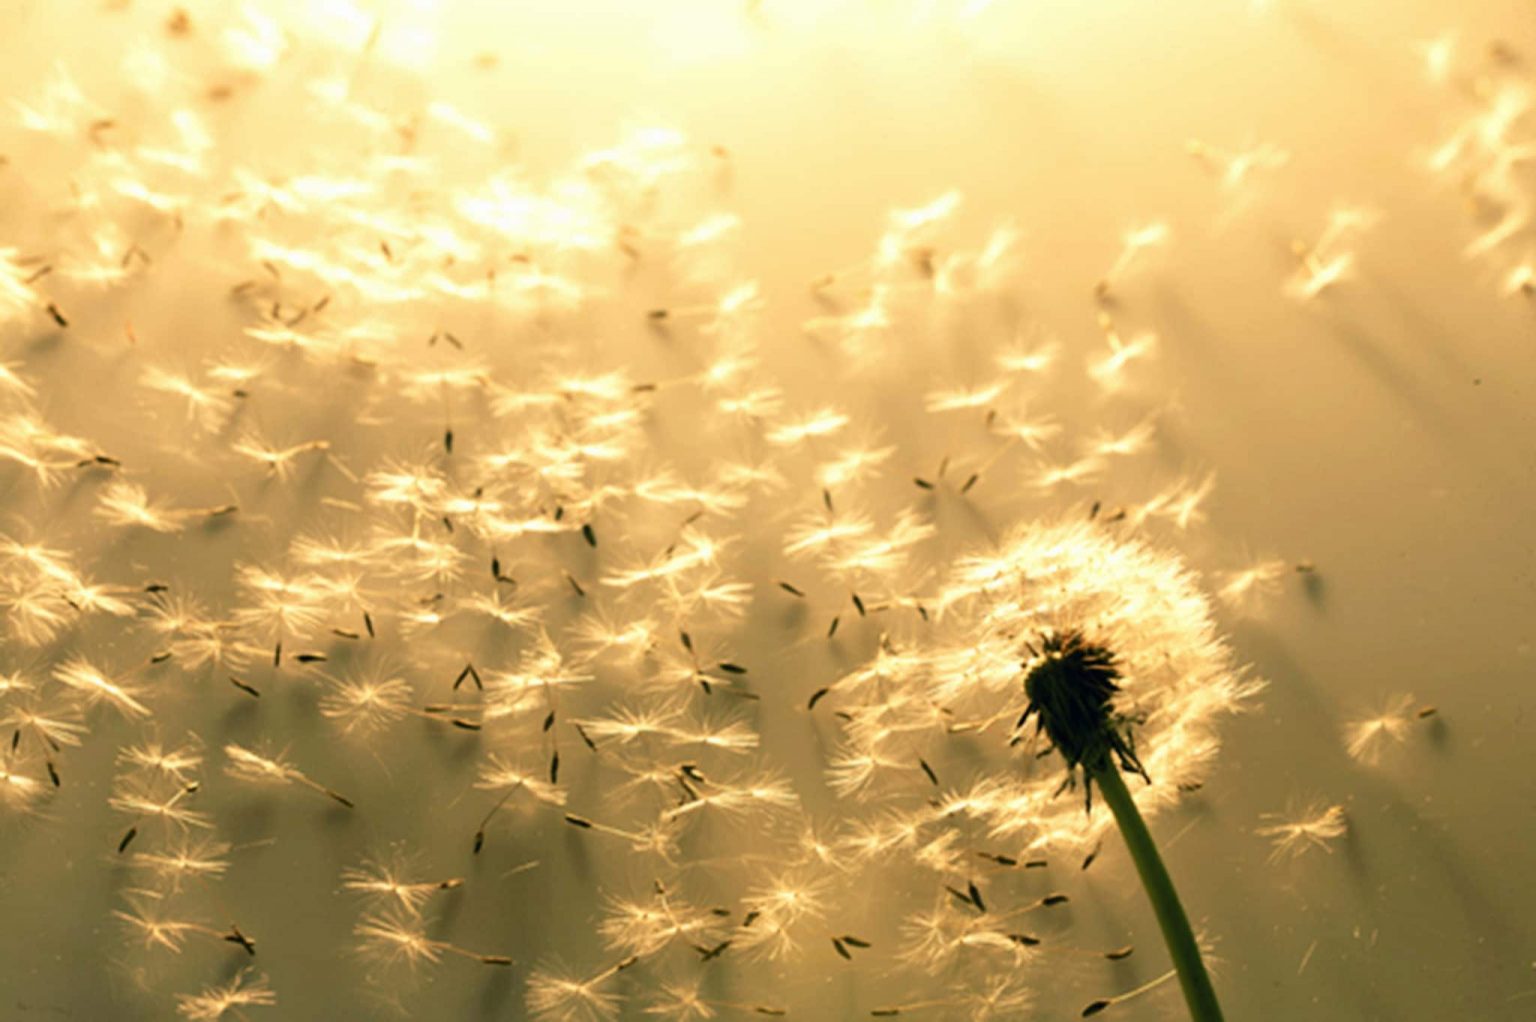 Dandelion seeds floating a known seasonal allergen